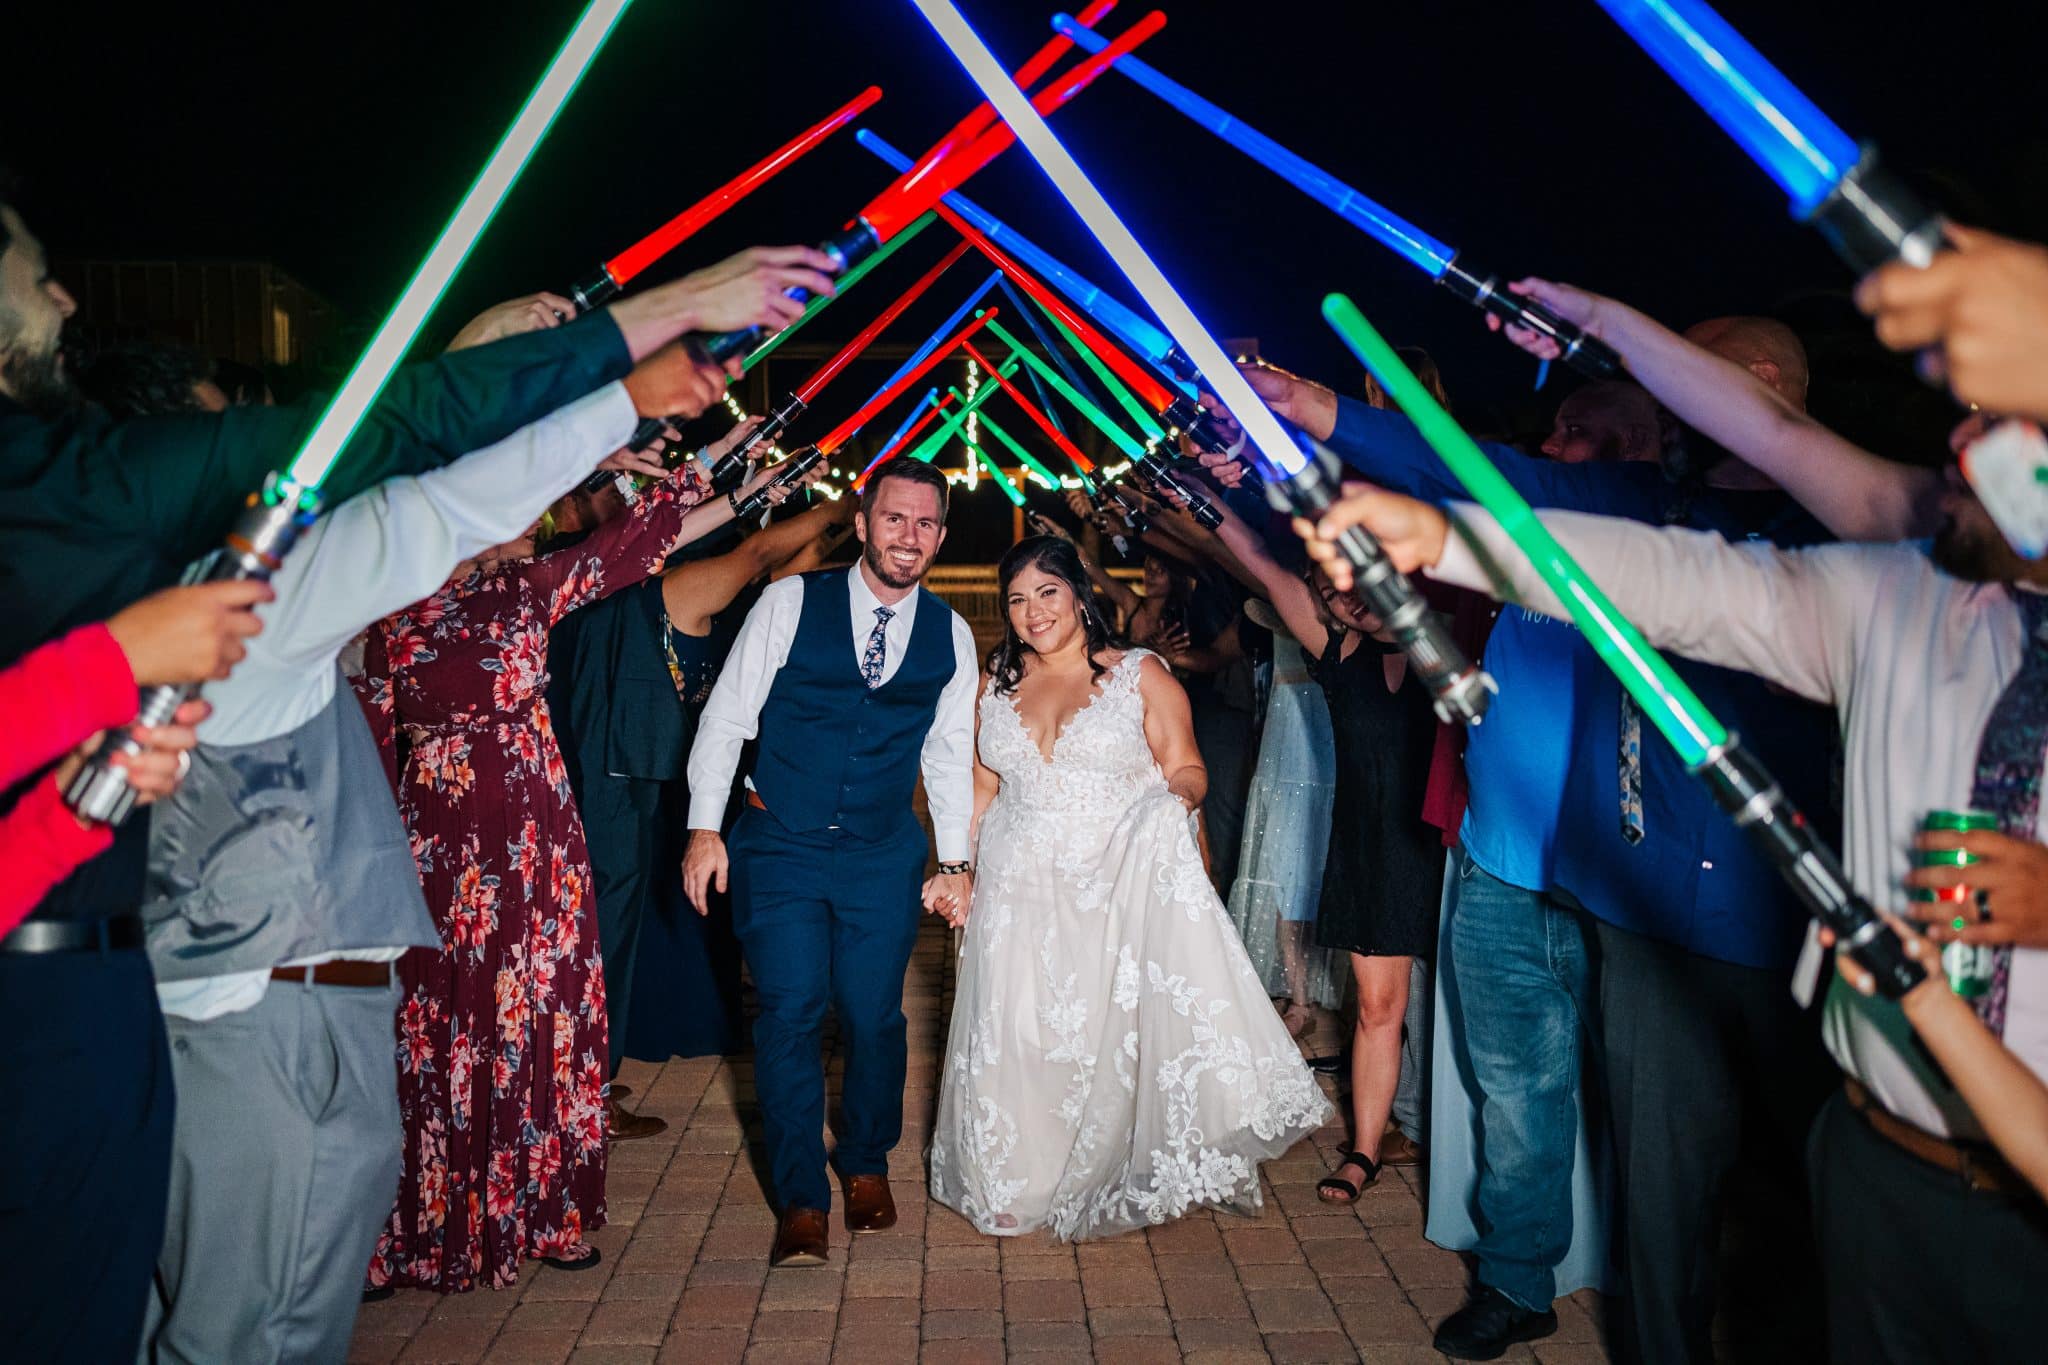 Light saber exit for a whimsical wedding at Hidden Barn Venue in Central Florida